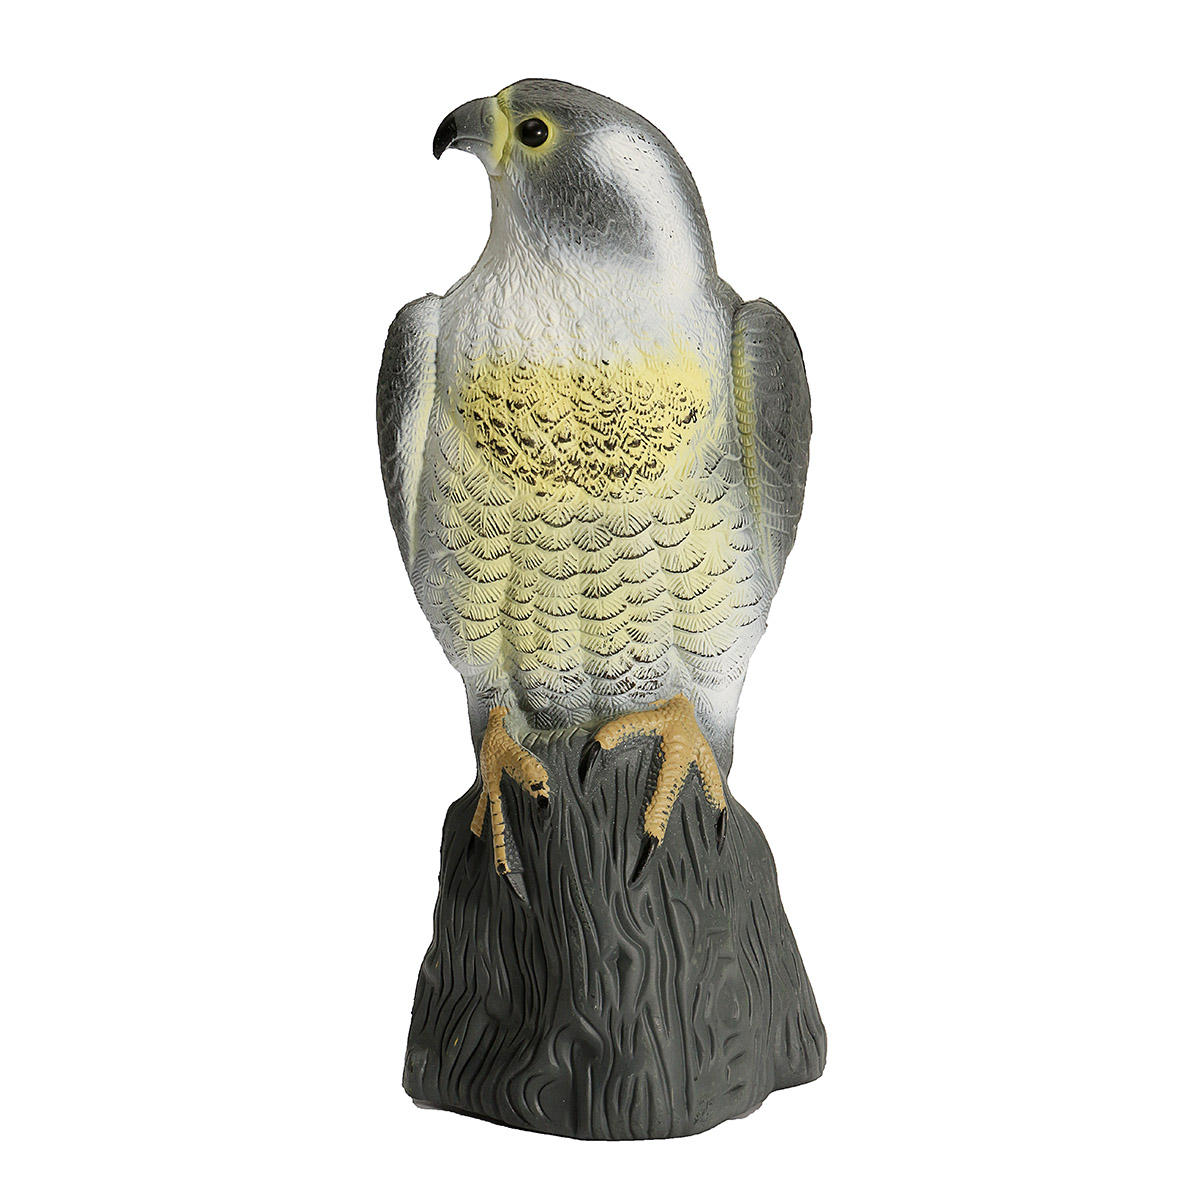 Simulation-Falcon-Hawk-Decoy-Bird-Pigeon-Deterrent-Scarer-Repeller-Garden-Lawn-Decor-Hallowmas-Decor-1084916-2